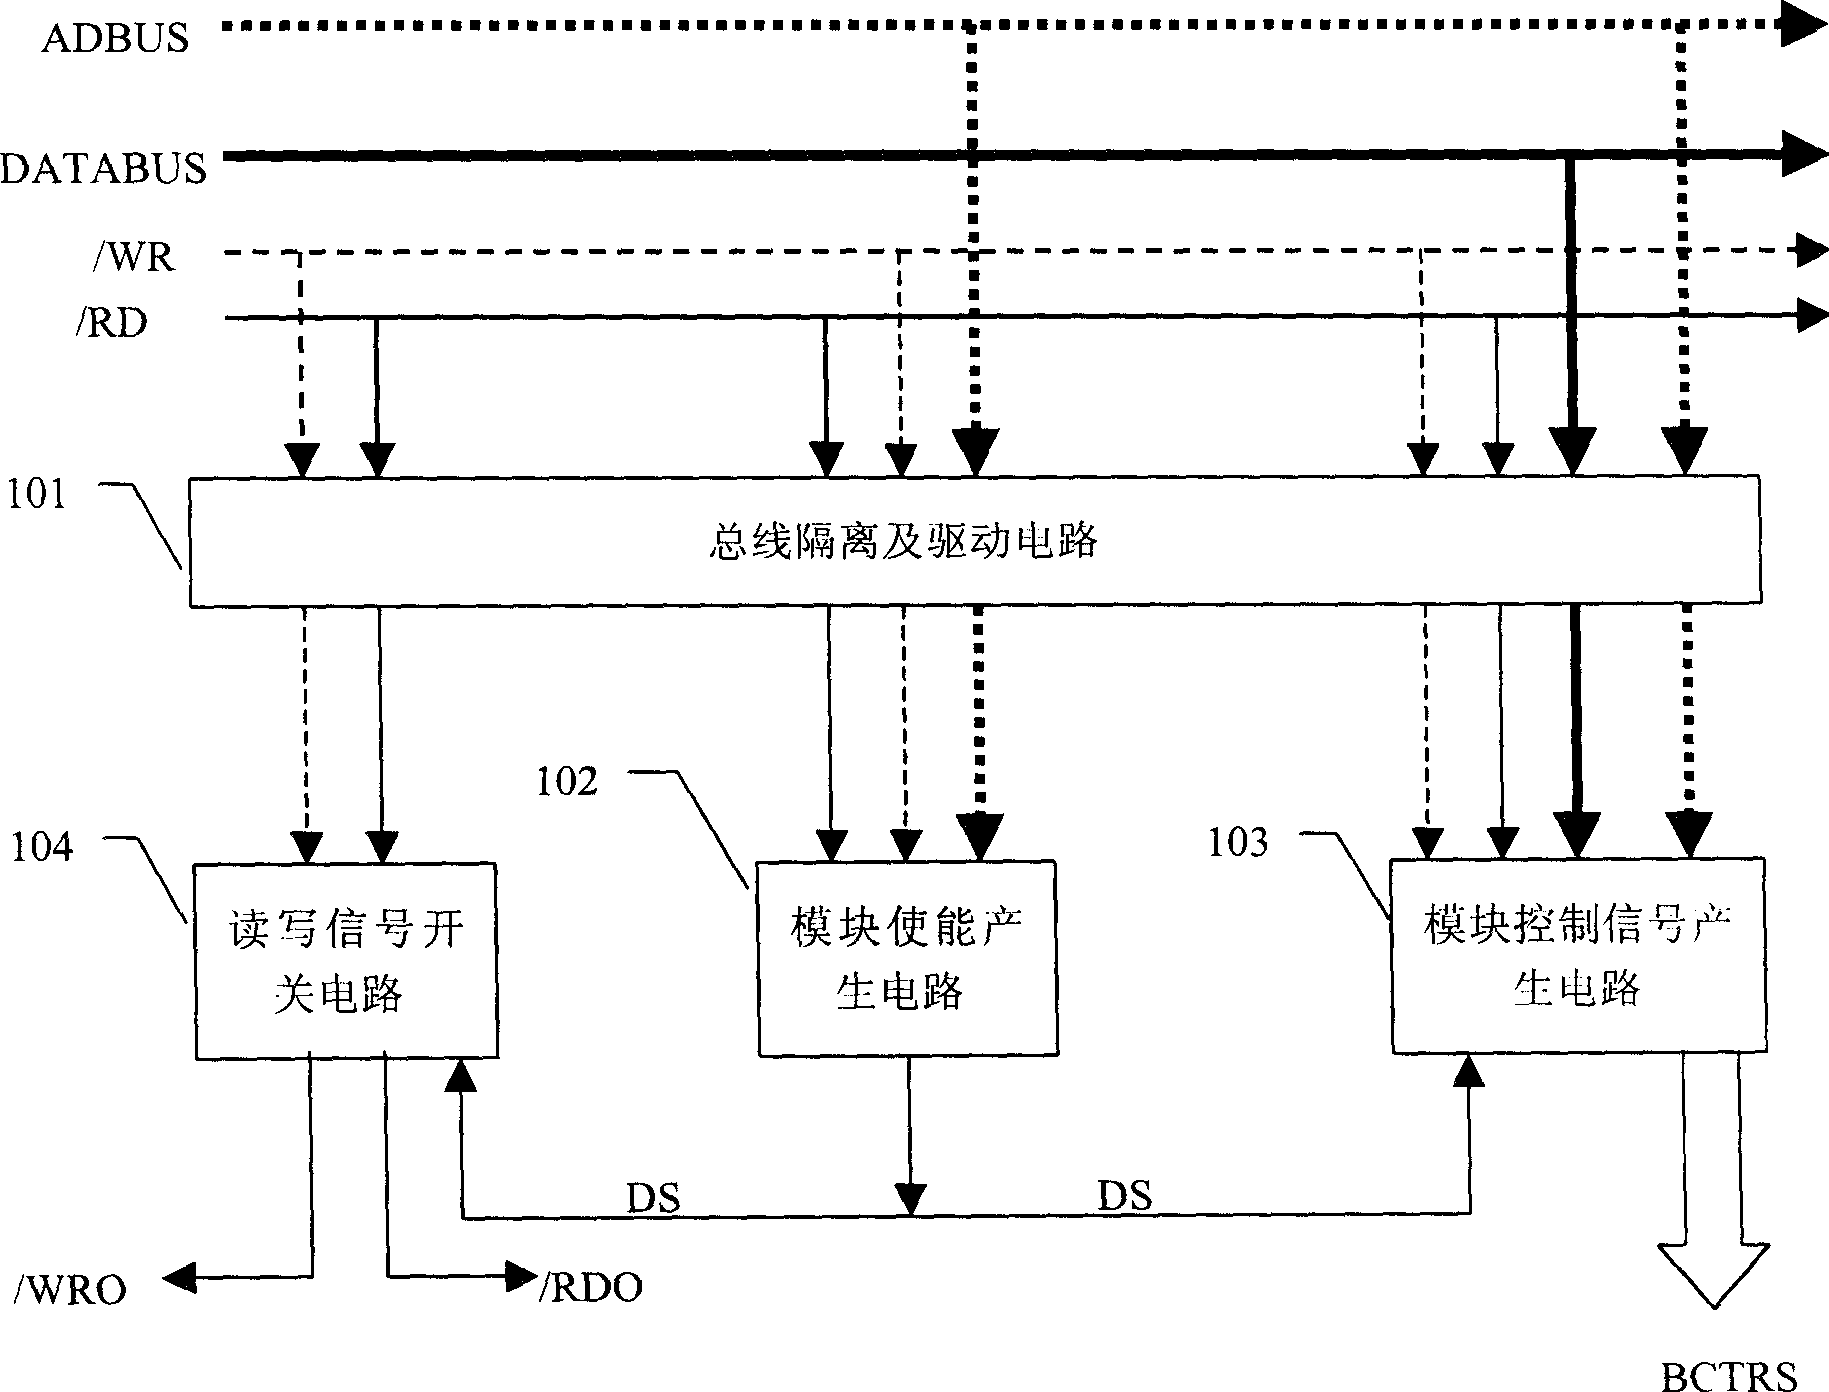 Module address unit based on porallel bus